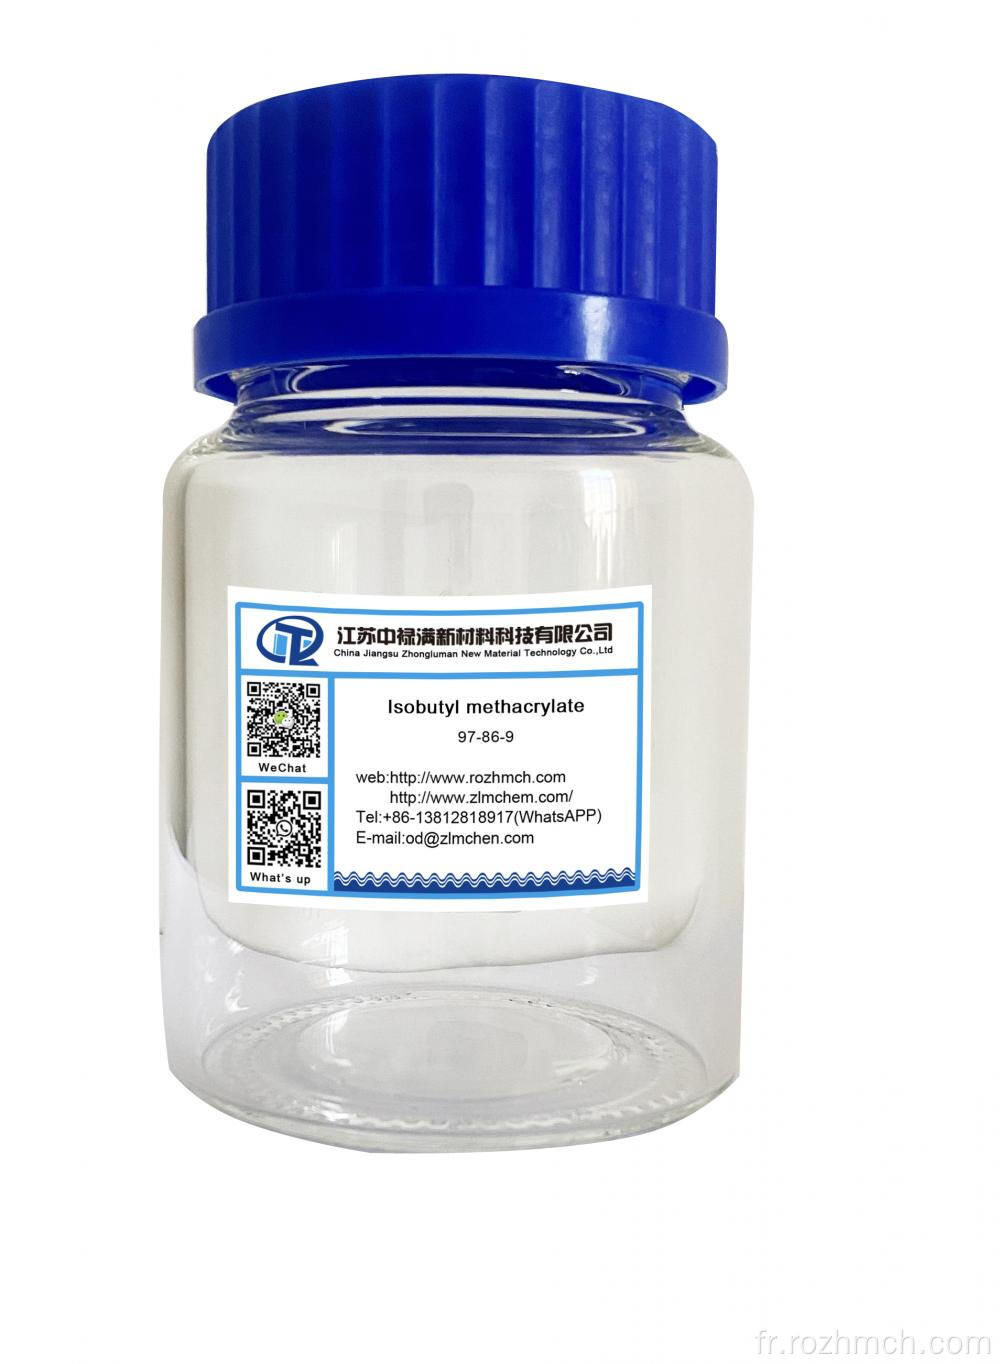 Isobutyl méthacrylate CAS 97-86-9